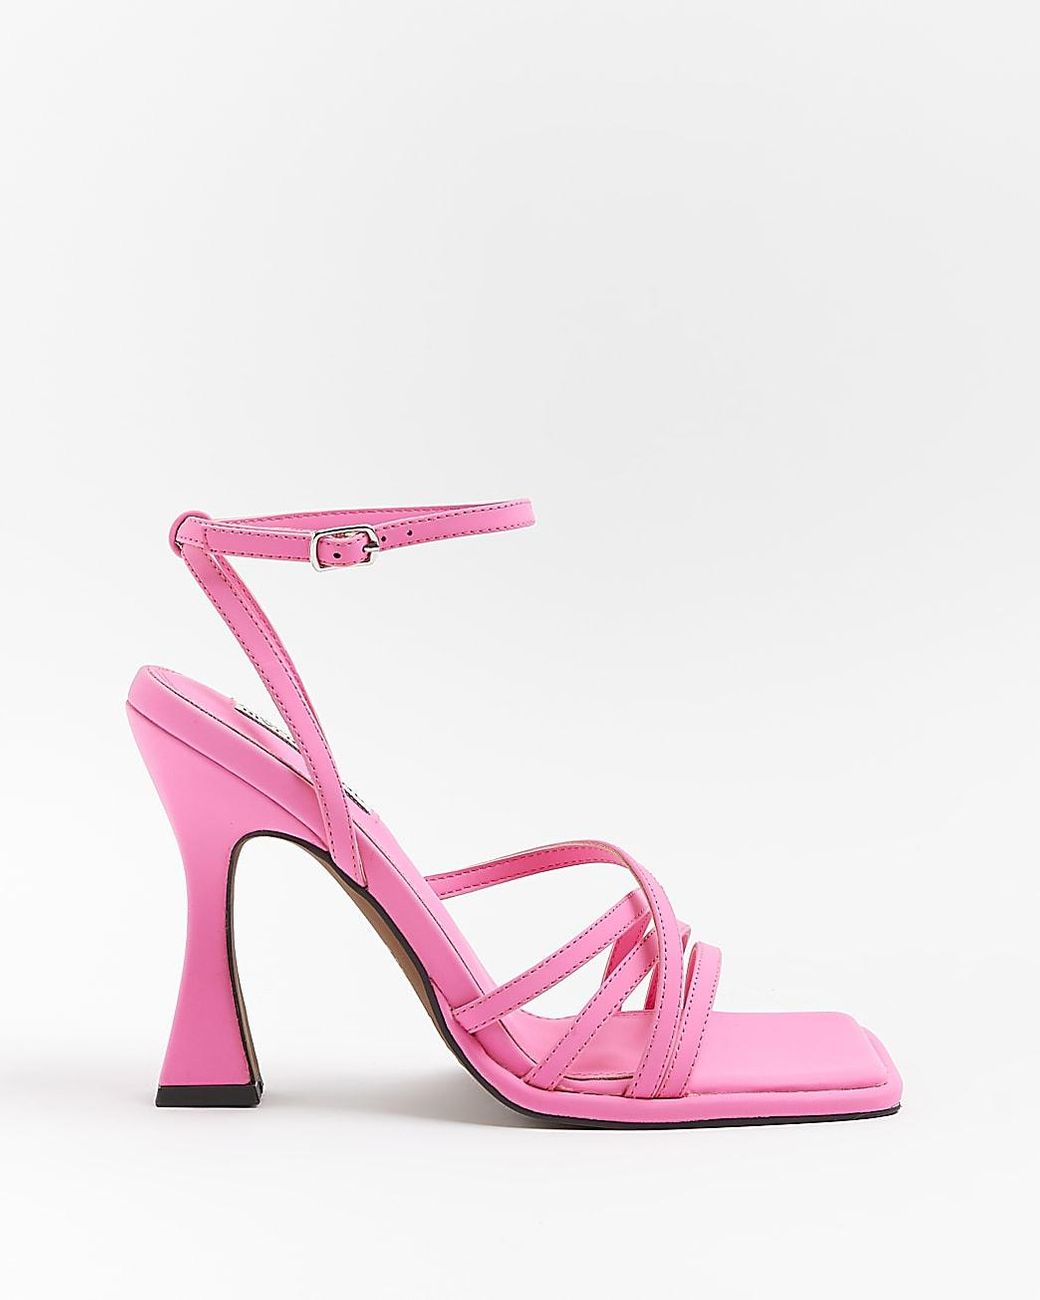 River Island Pink Strappy Heeled Sandals | Lyst Australia